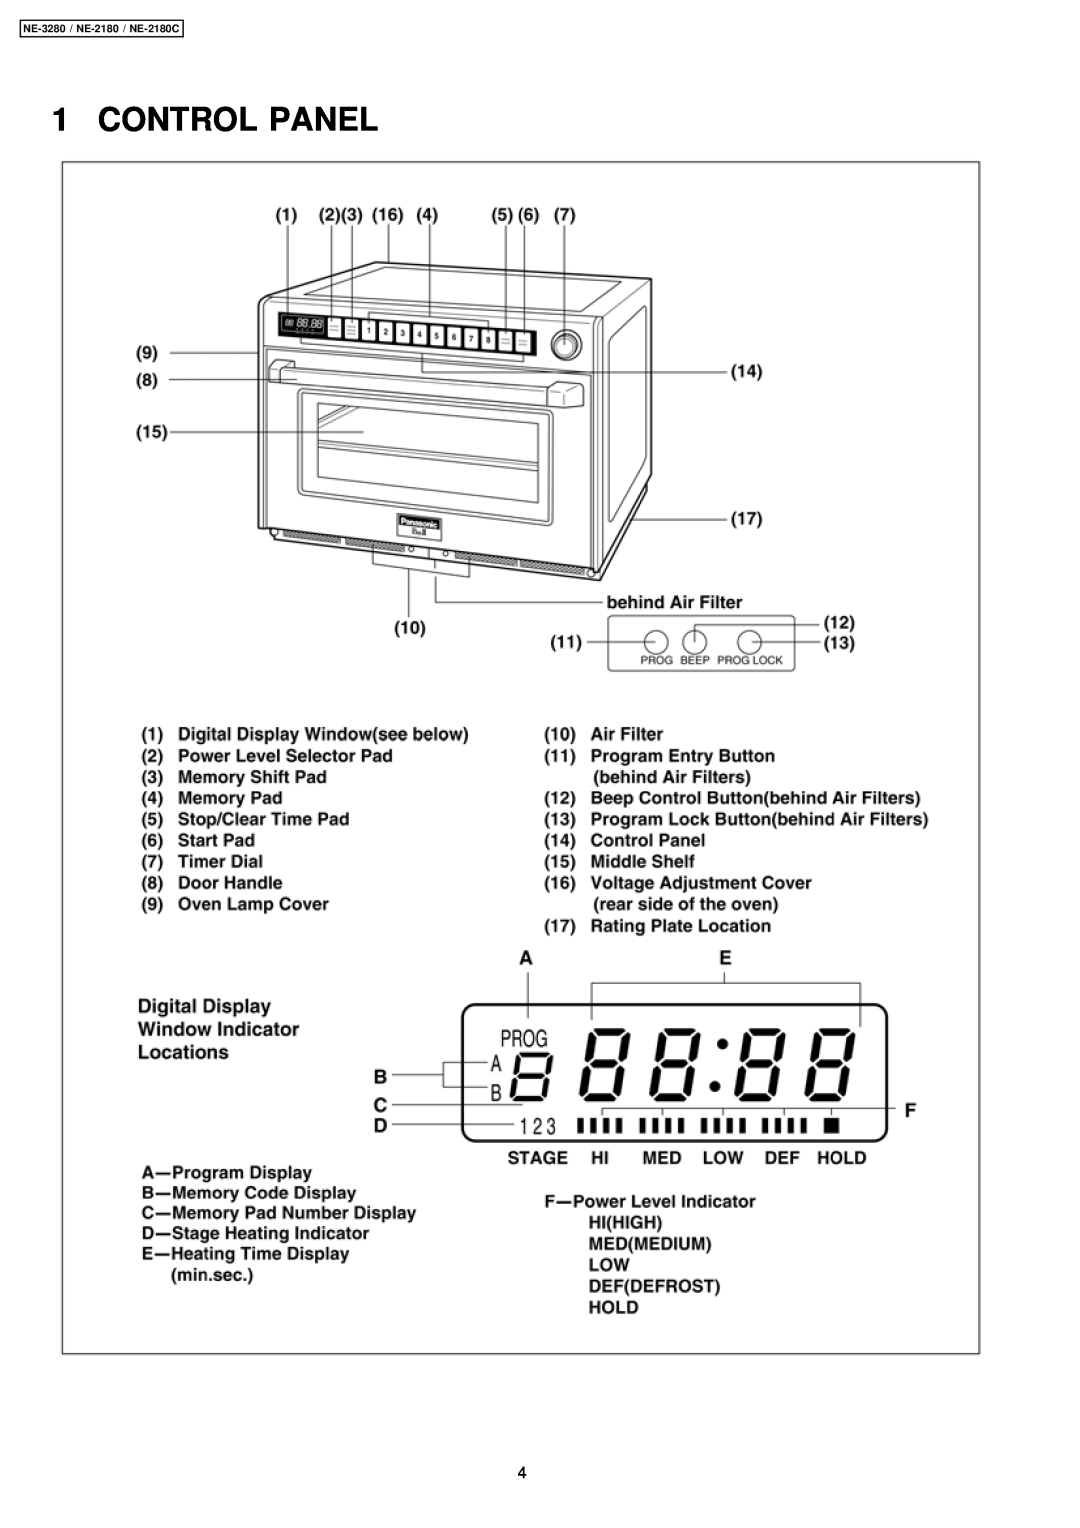 Panasonic manual Control Panel, NE-3280 / NE-2180 / NE-2180C 